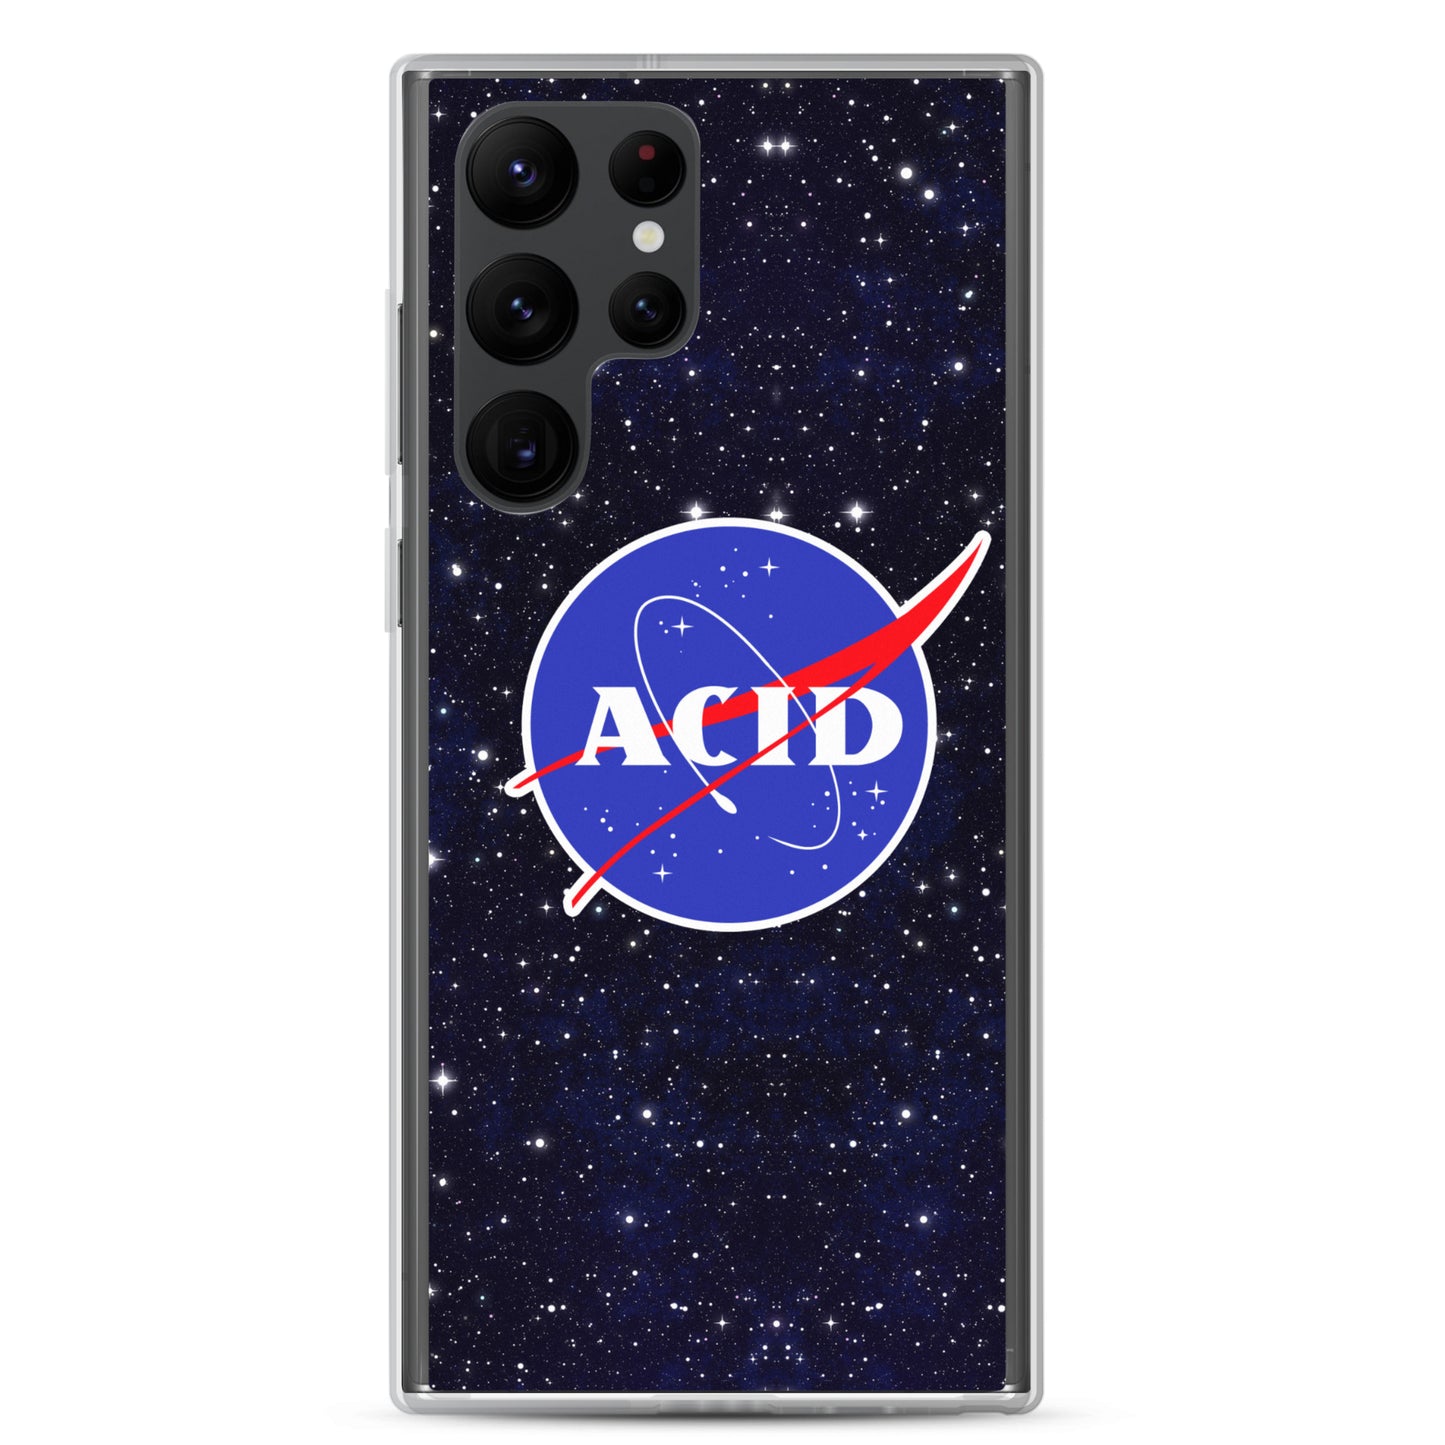 Acid Samsung Case